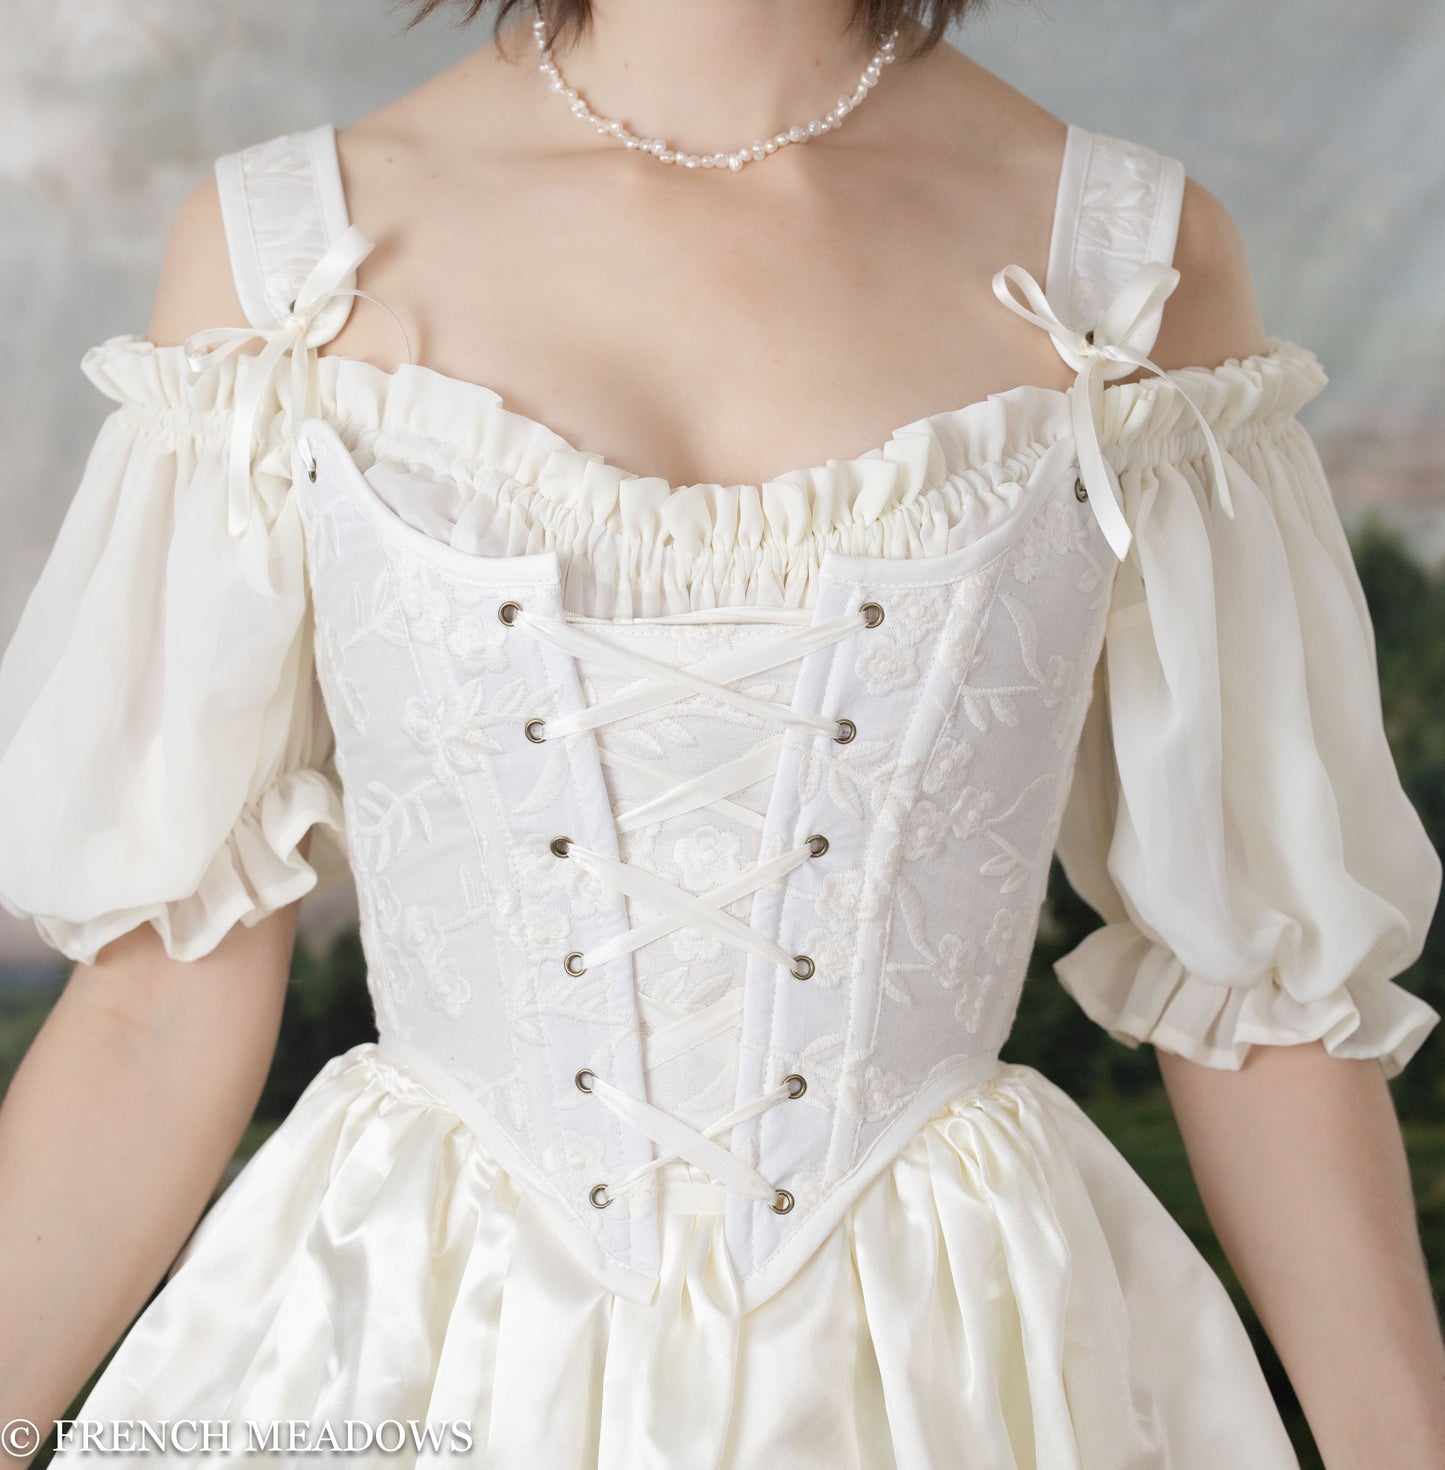 hobbit wedding dress with white floral corset